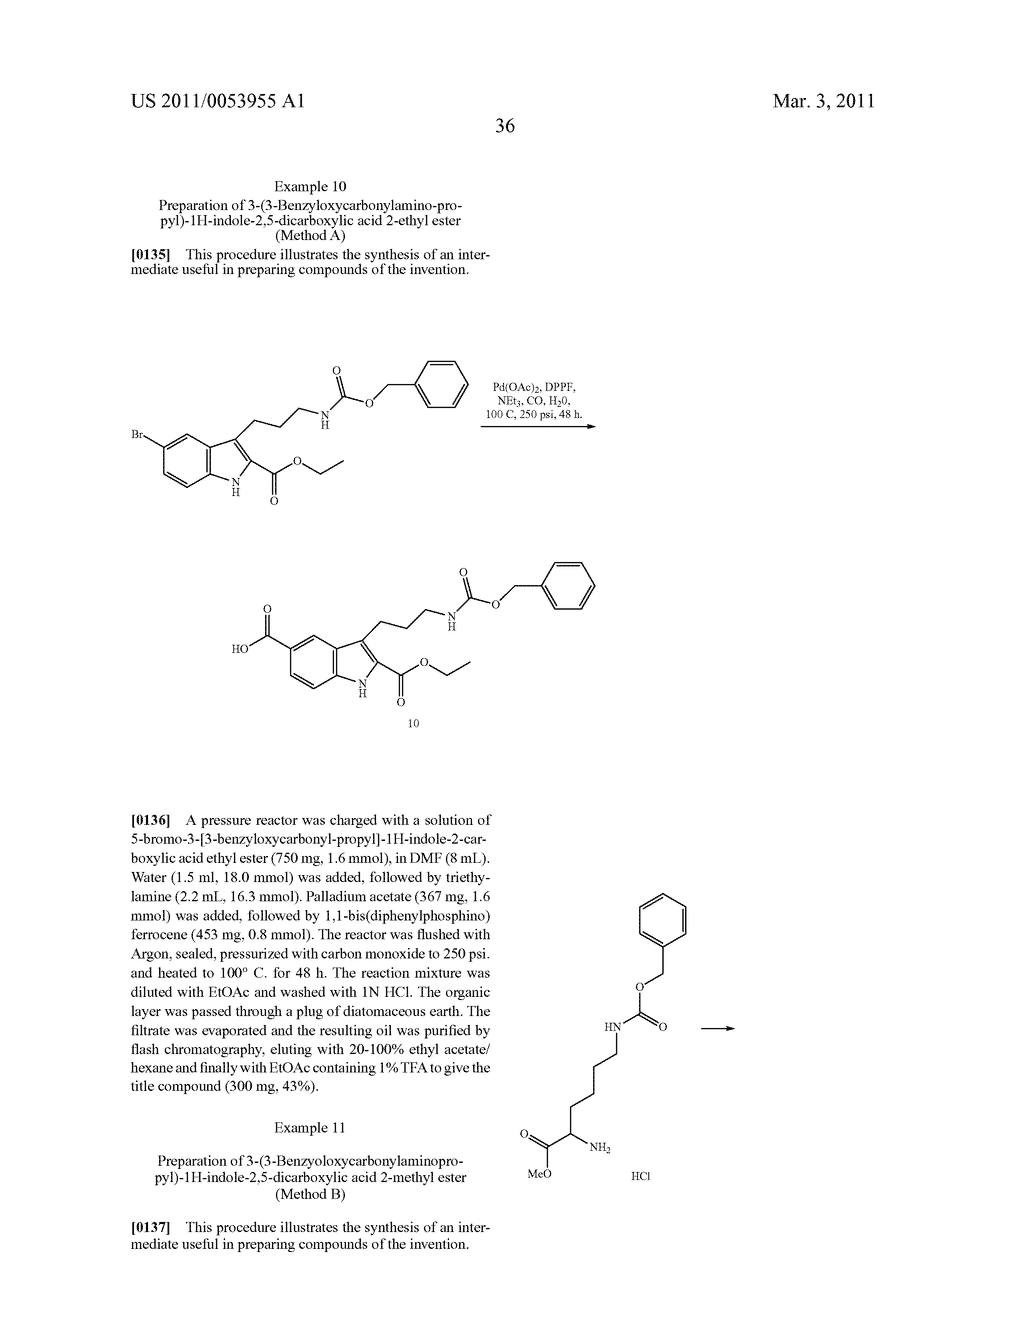 ANTI-CYTOKINE HETEROCYCLIC COMPOUNDS - diagram, schematic, and image 37